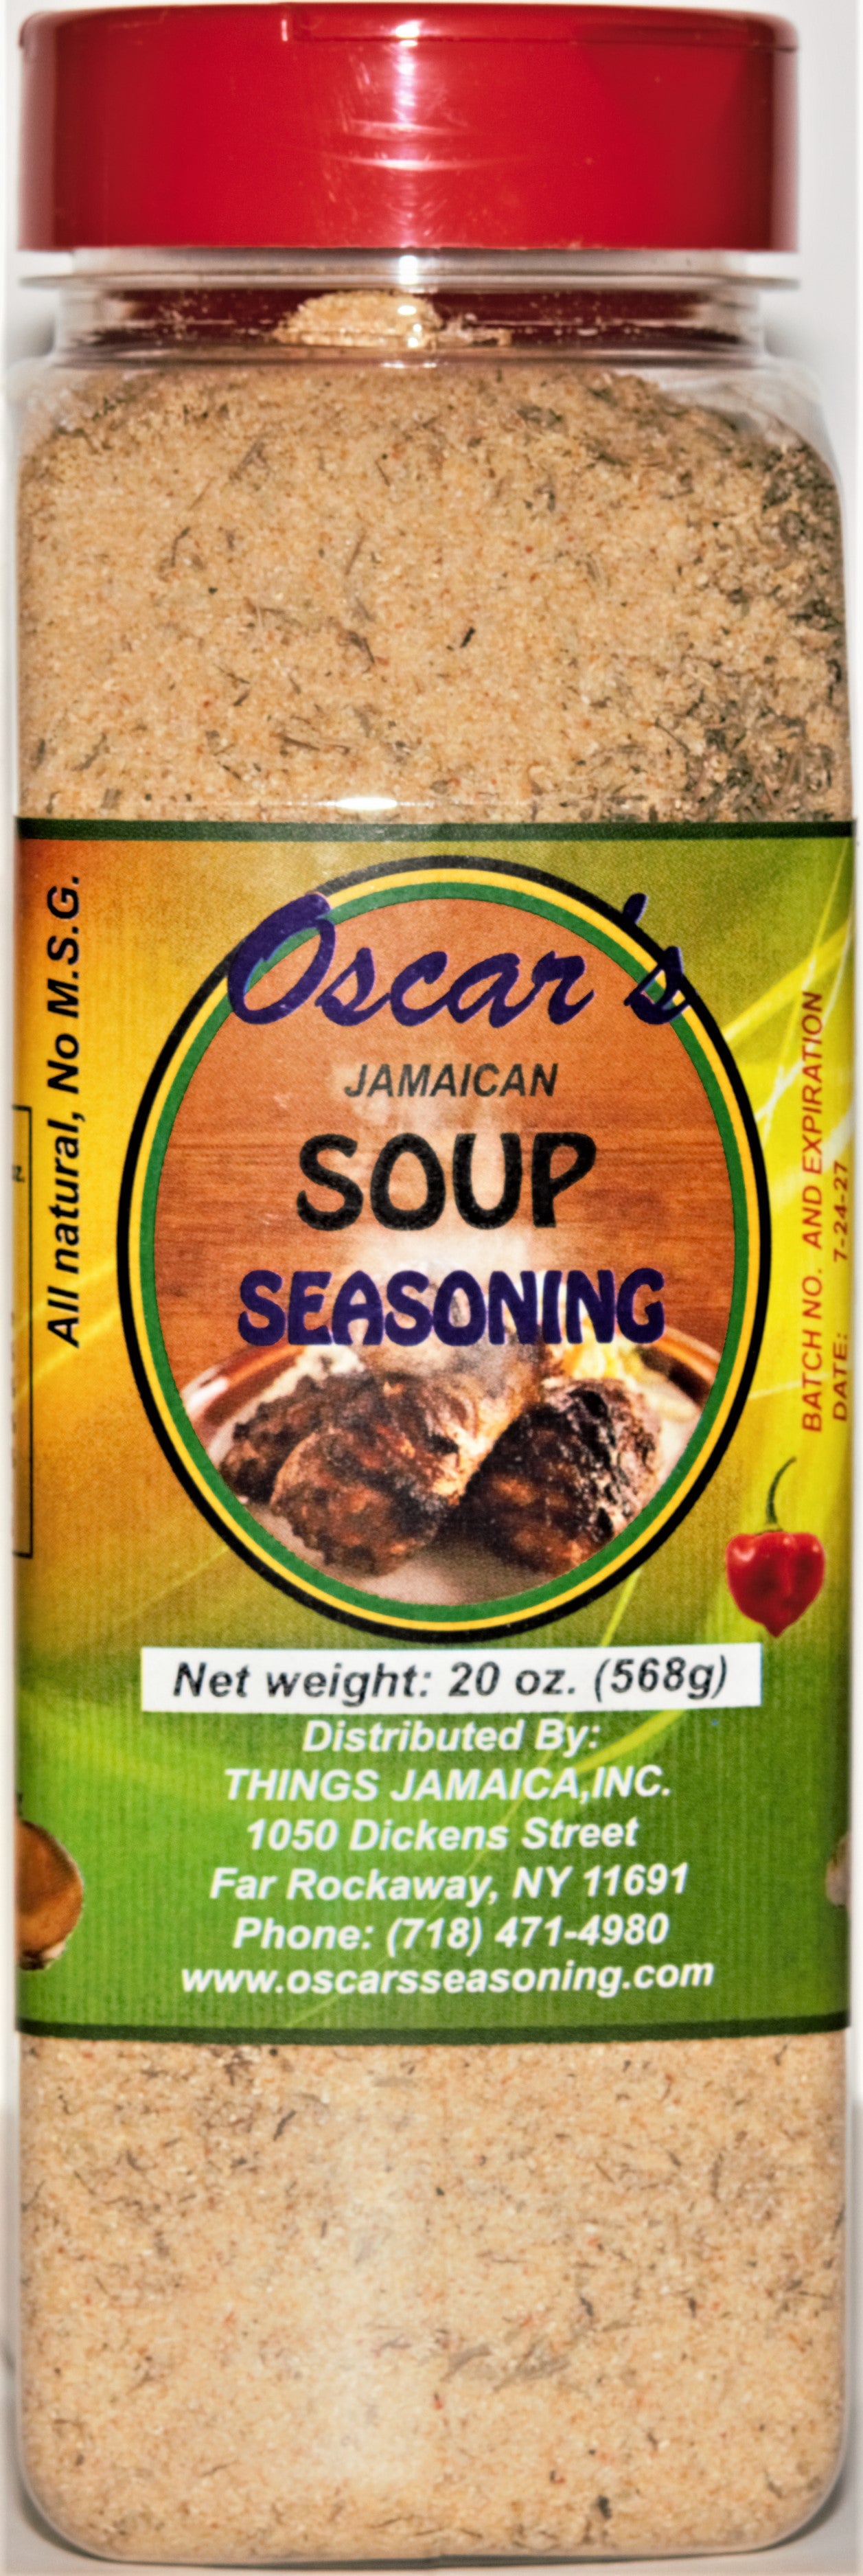 Soup Seasoning 20 oz  Oscar's seasoning, Things Jamaica, Inc.